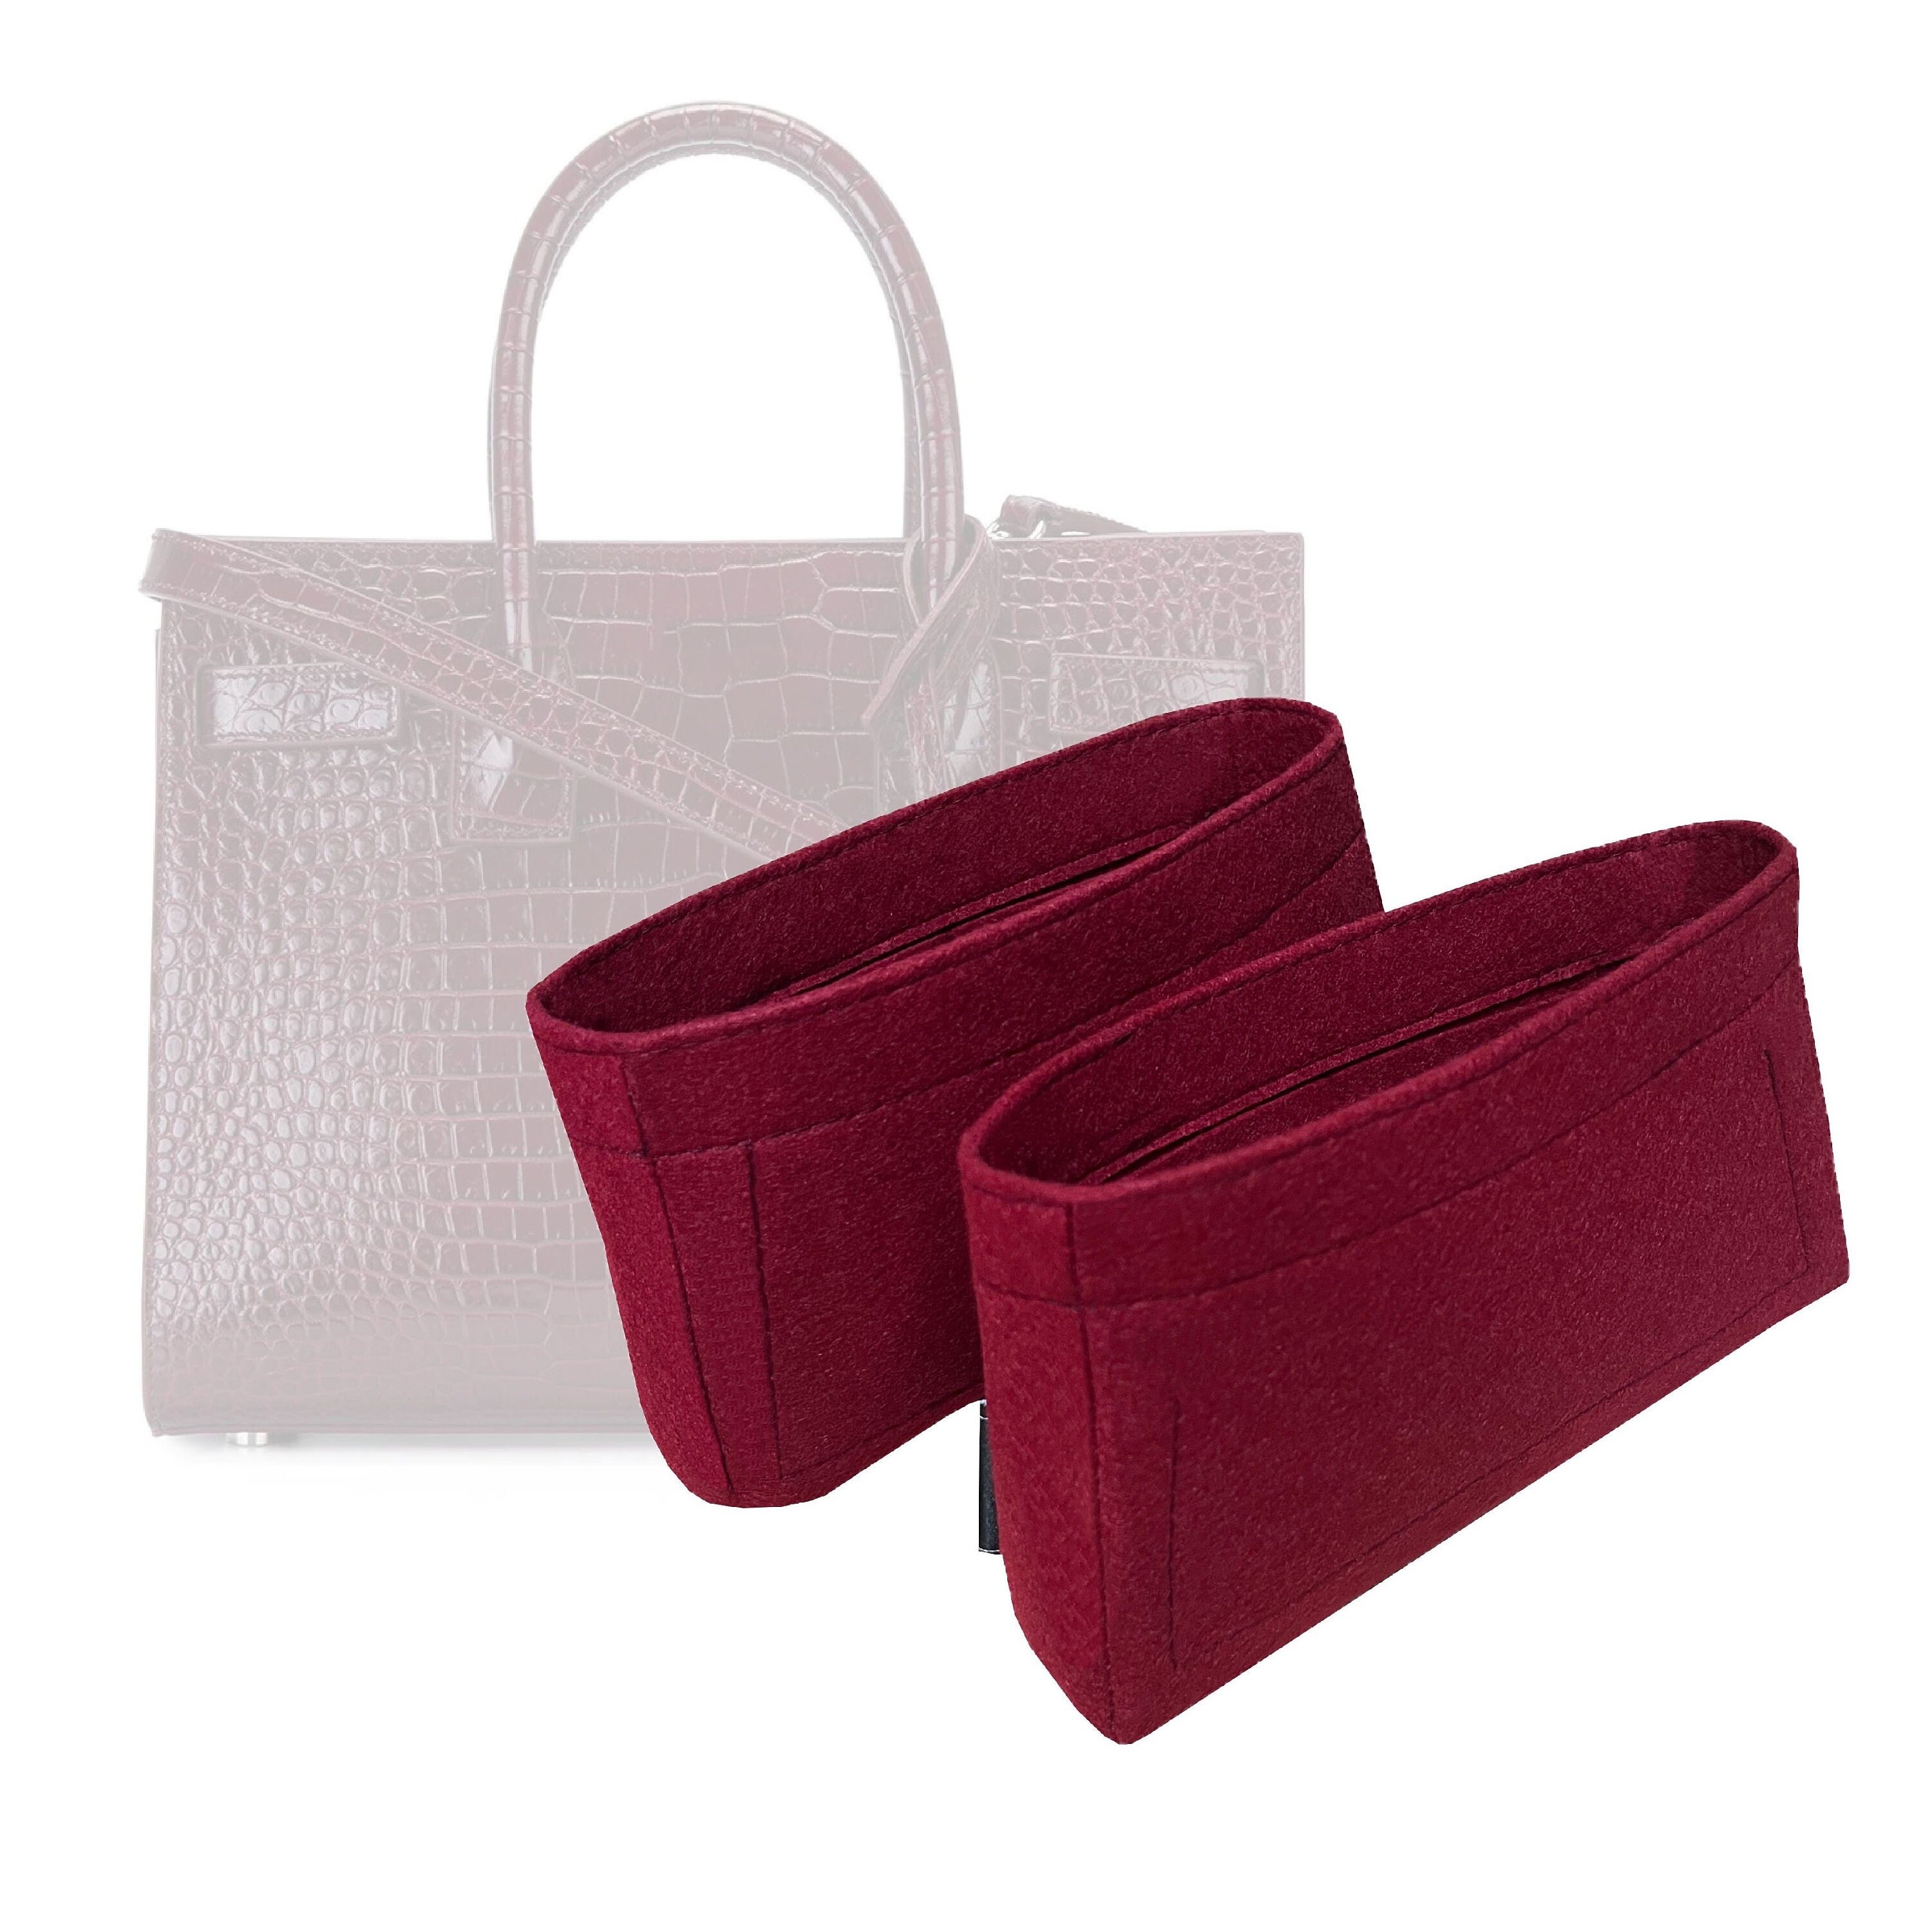  Zoomoni Premium Bag Organizer for Saint Laurent Sac De Jour ( Baby) Bag (Handmade/20 Color Options) [Purse Organiser, Liner, Insert,  Shaper] : Handmade Products